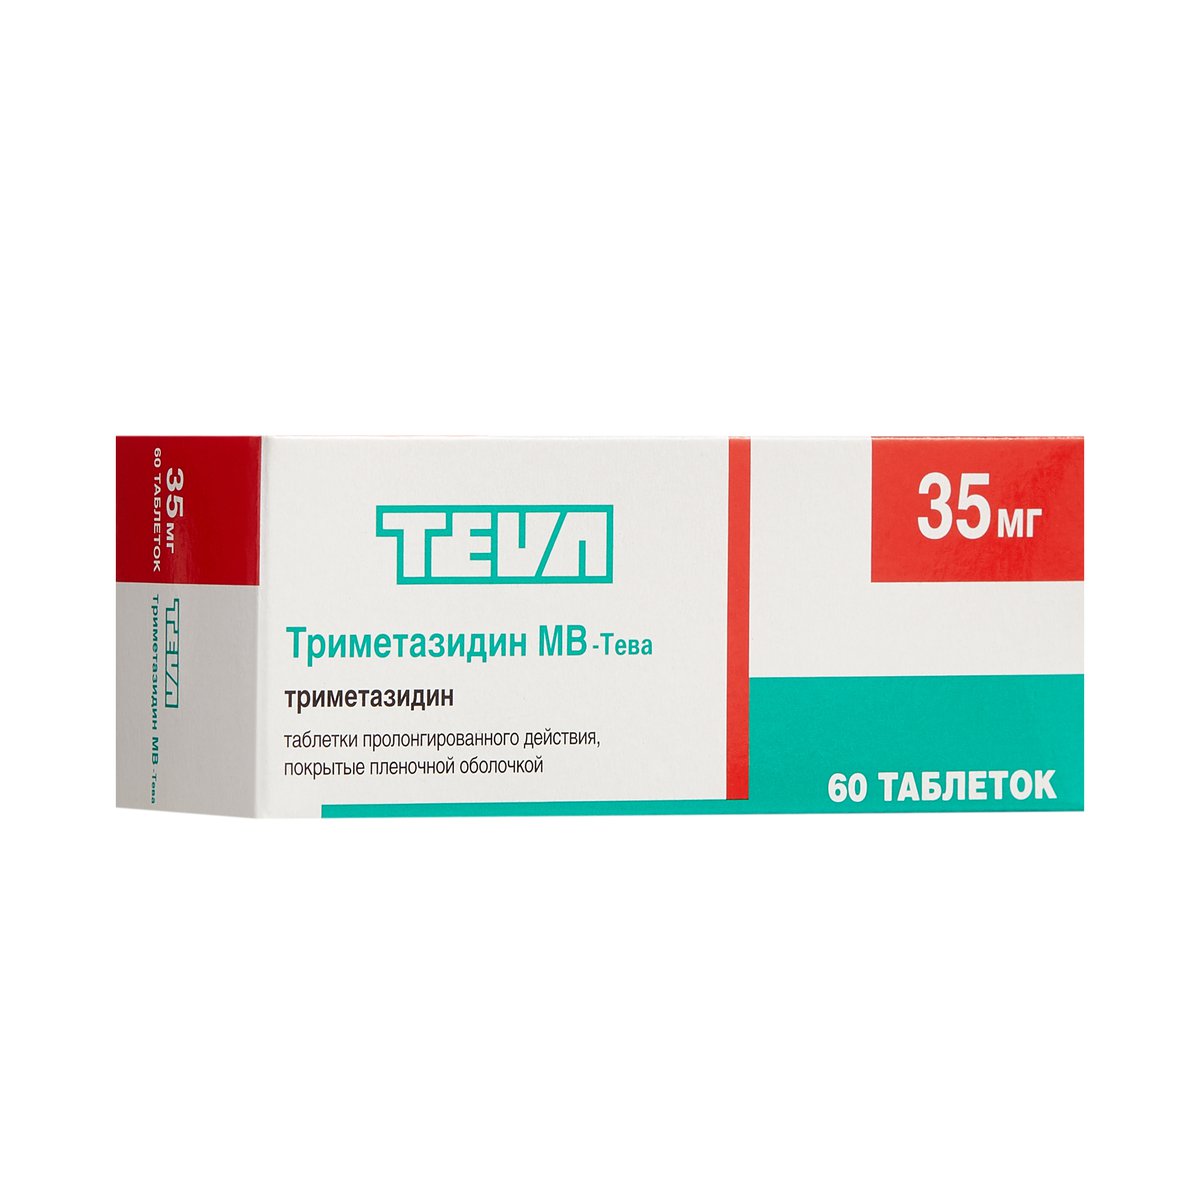 Триметазидин МВ-Тева (таблетки, 60 шт, 35 мг, для приема внутрь) - цена .